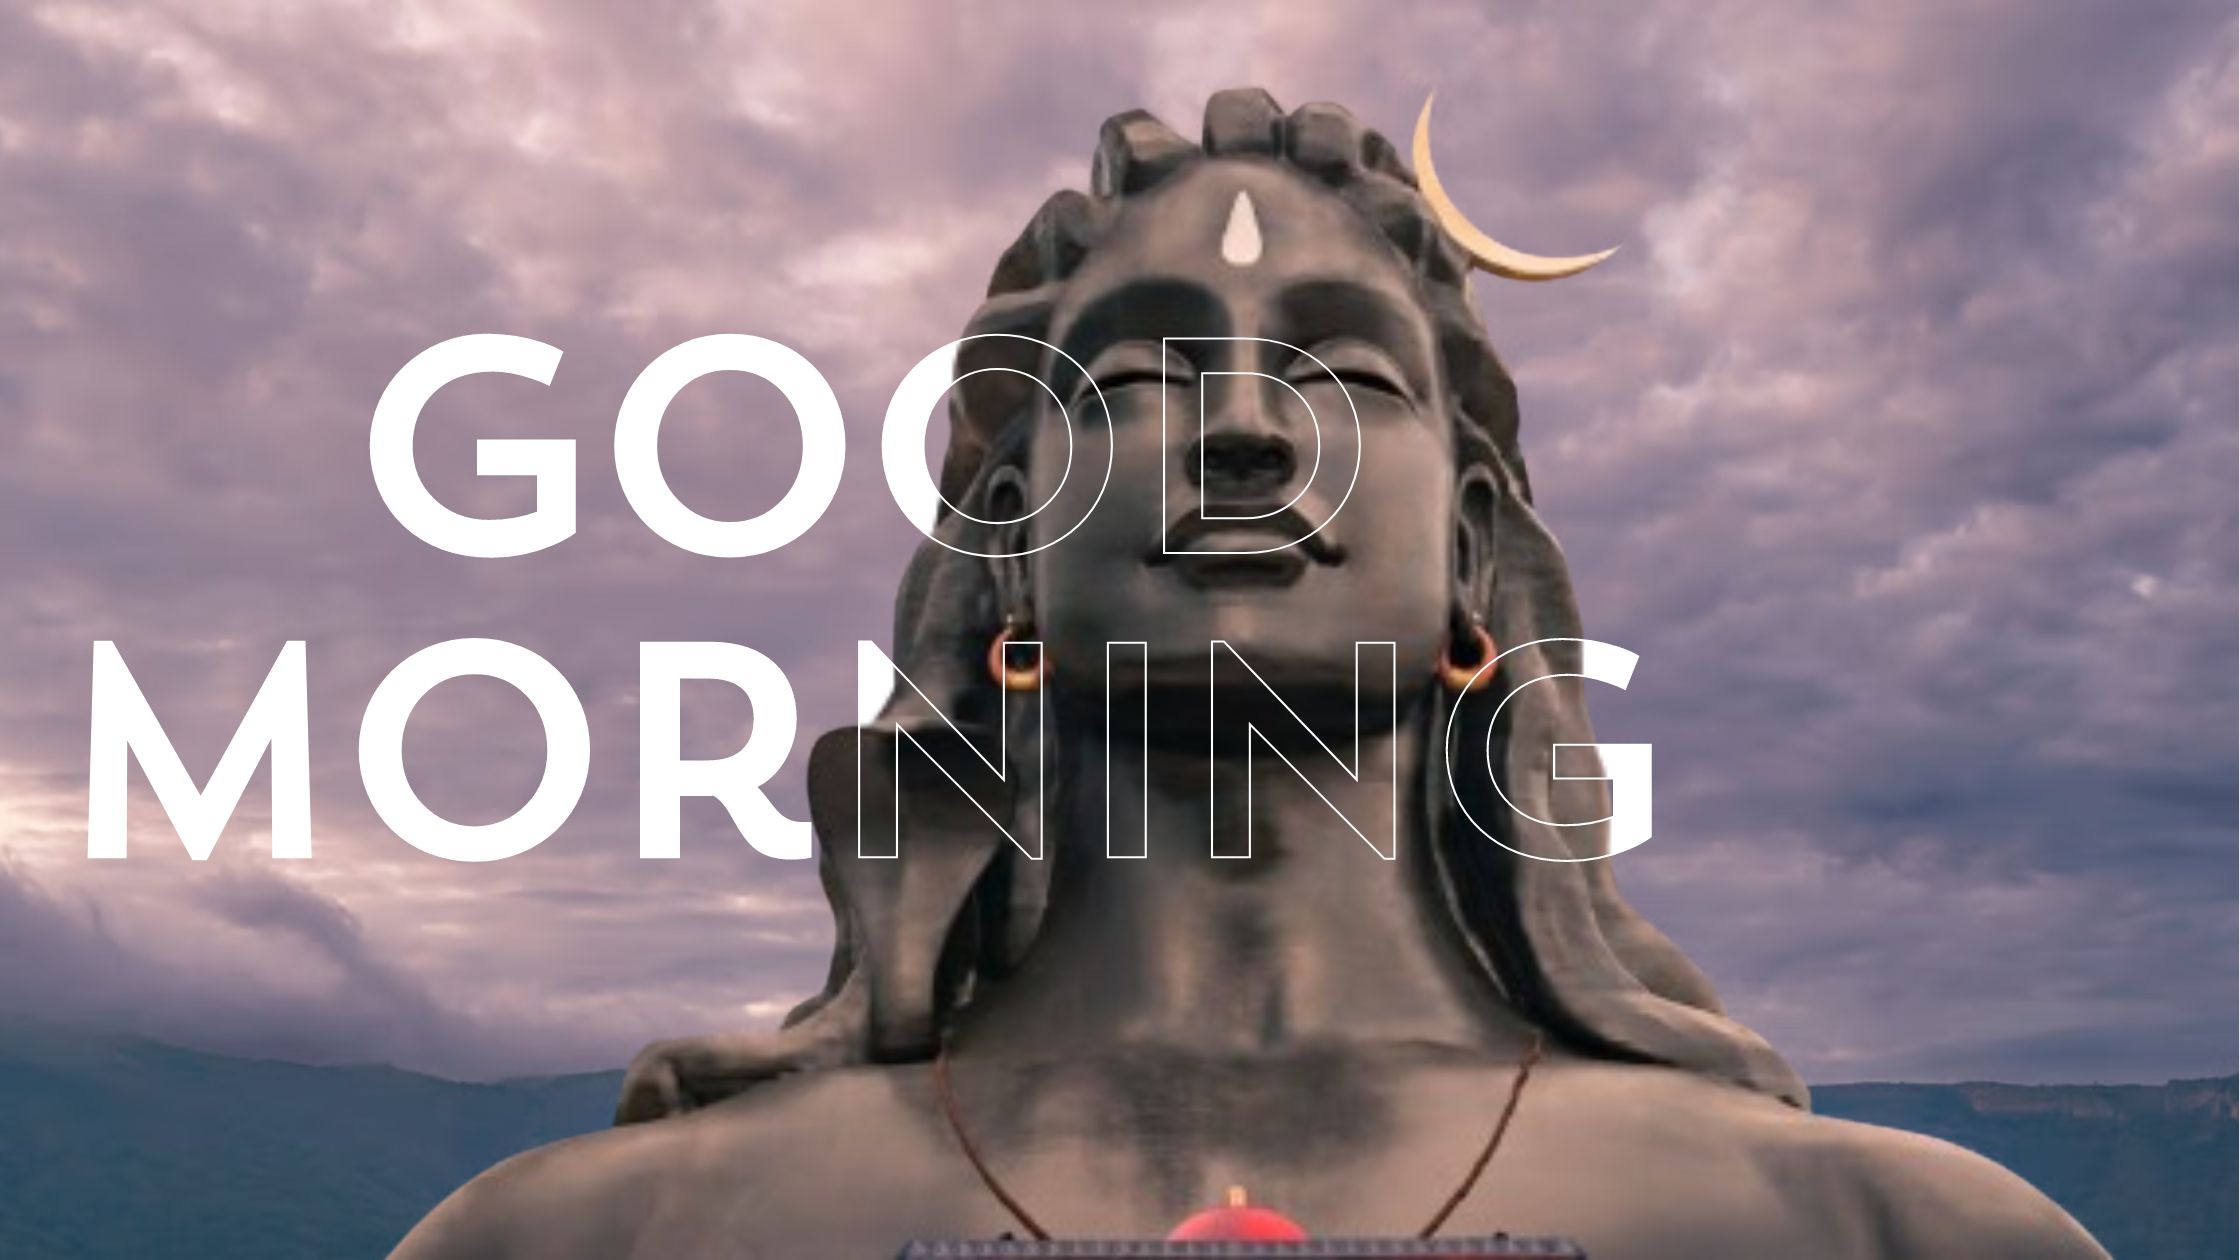 The Radiance of Good Morning God Images: A Spiritual Awakening